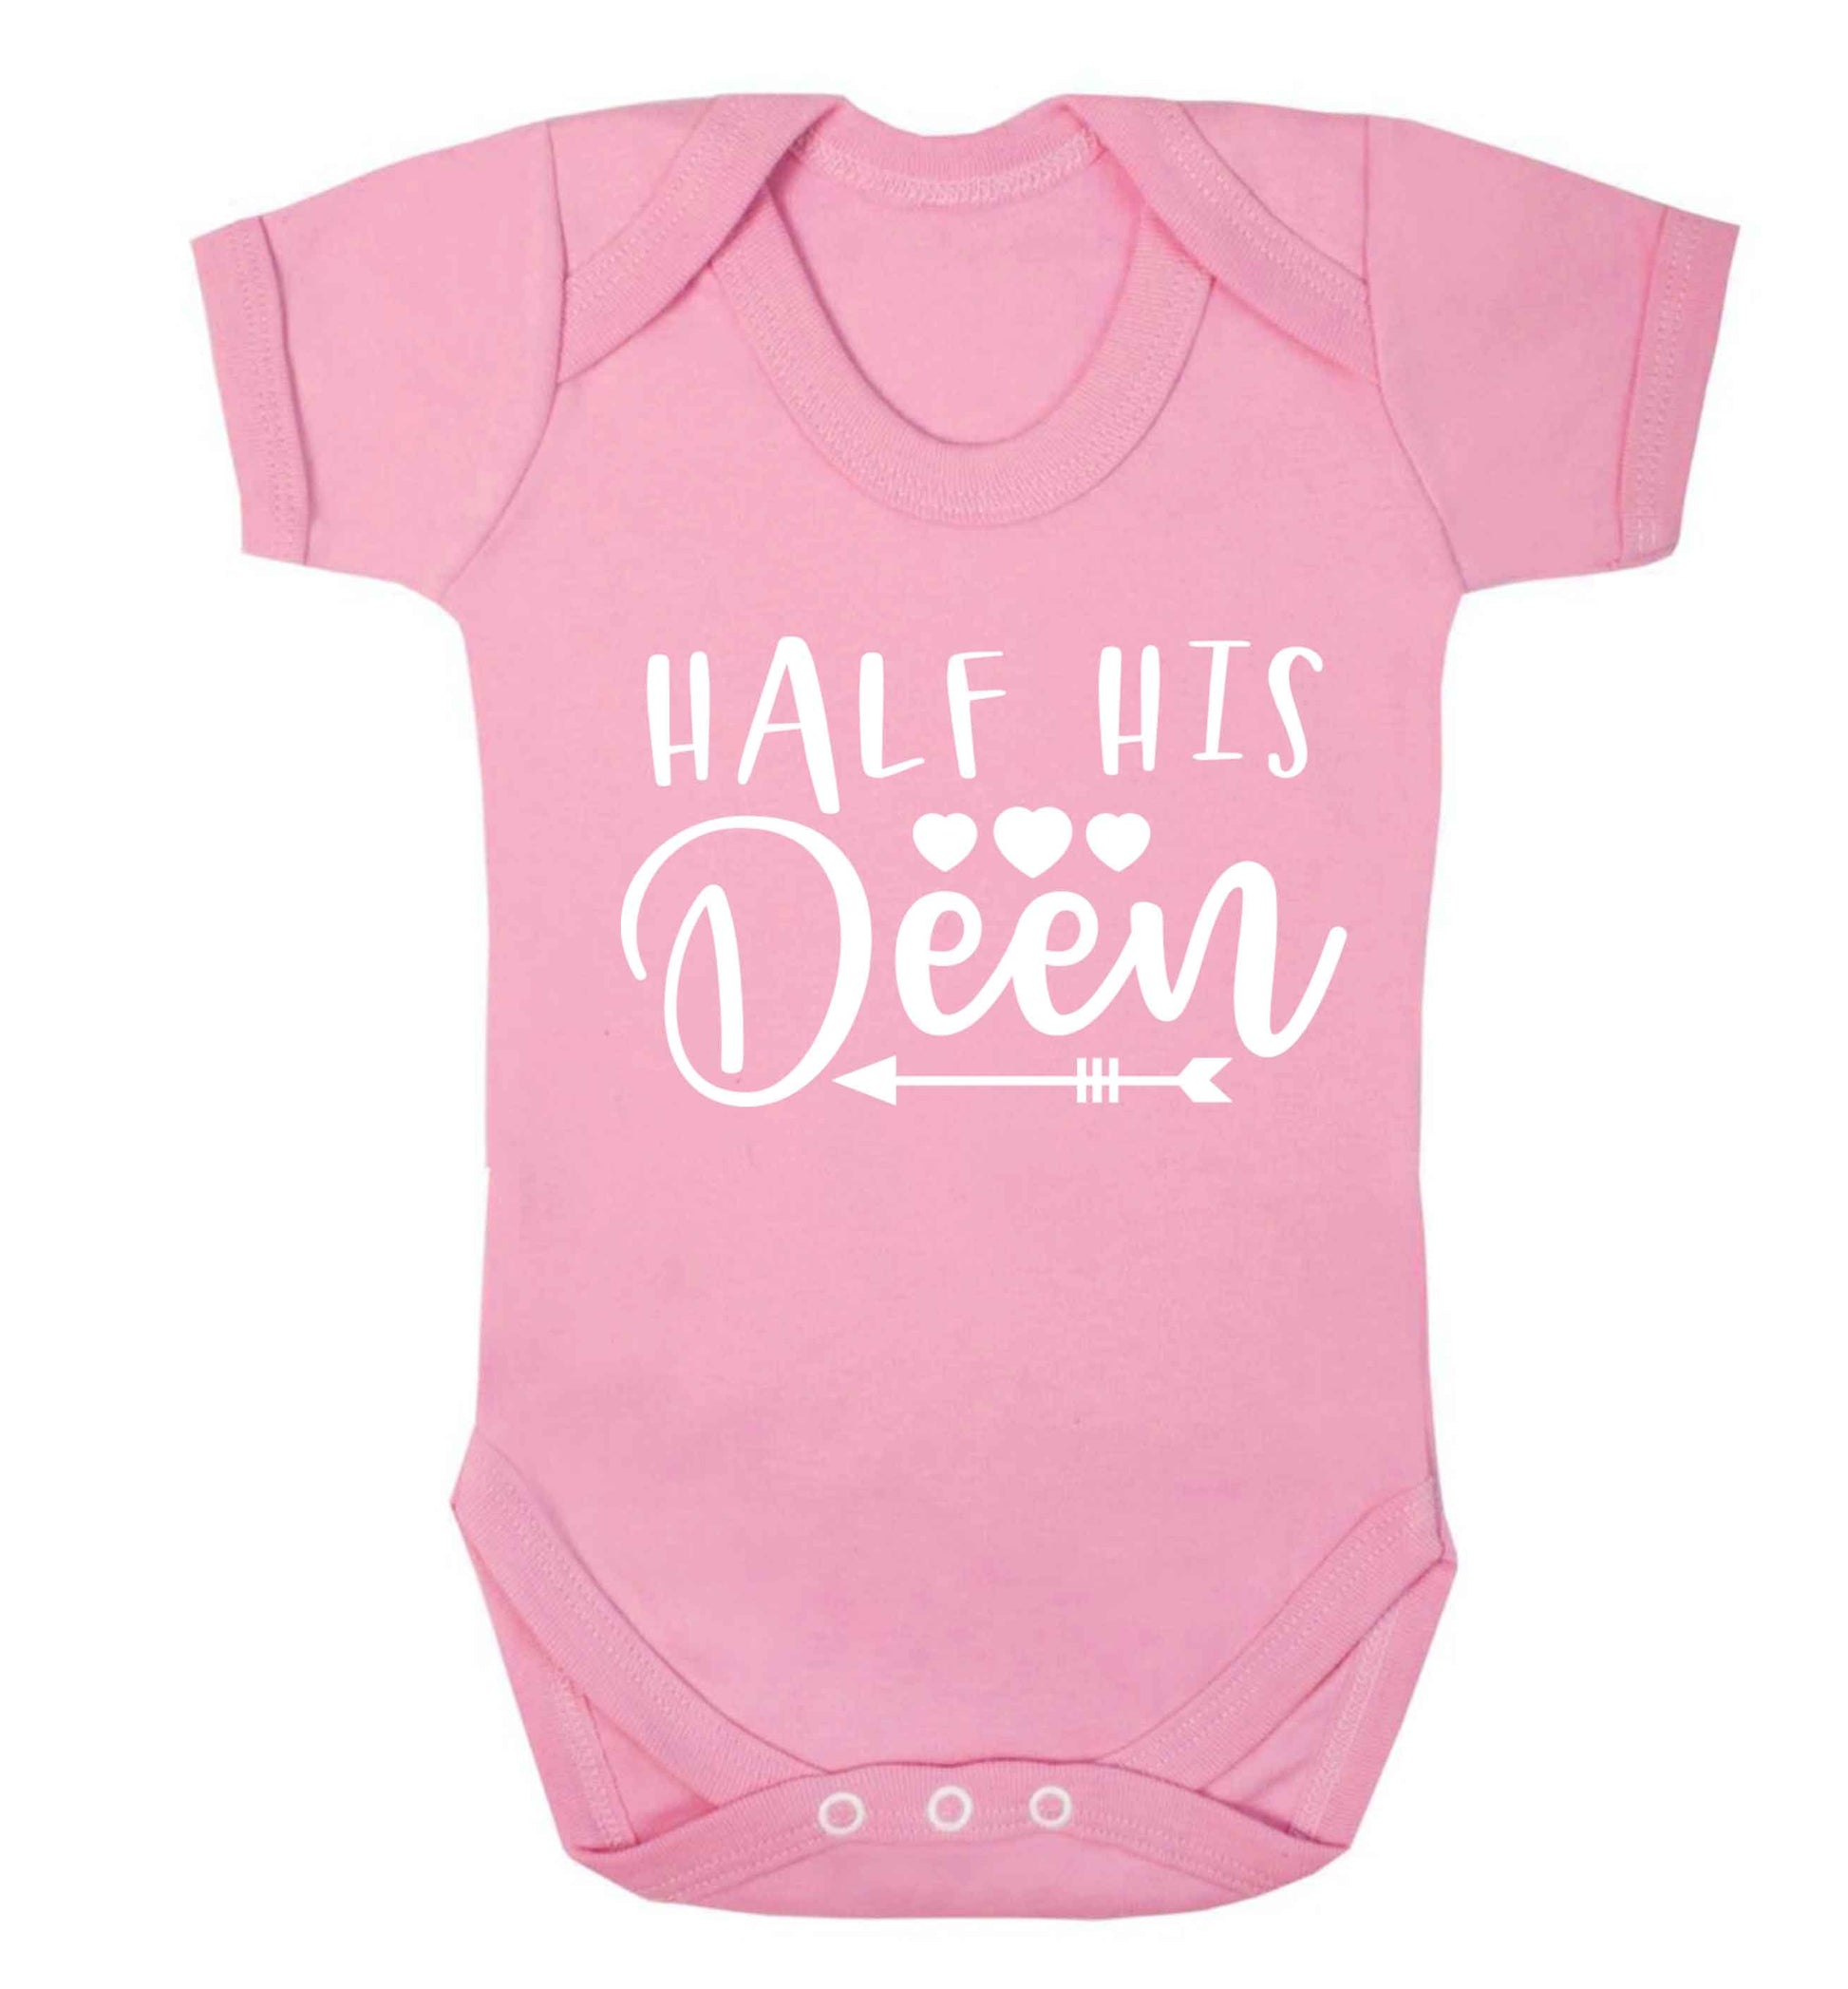 Half his deen Baby Vest pale pink 18-24 months